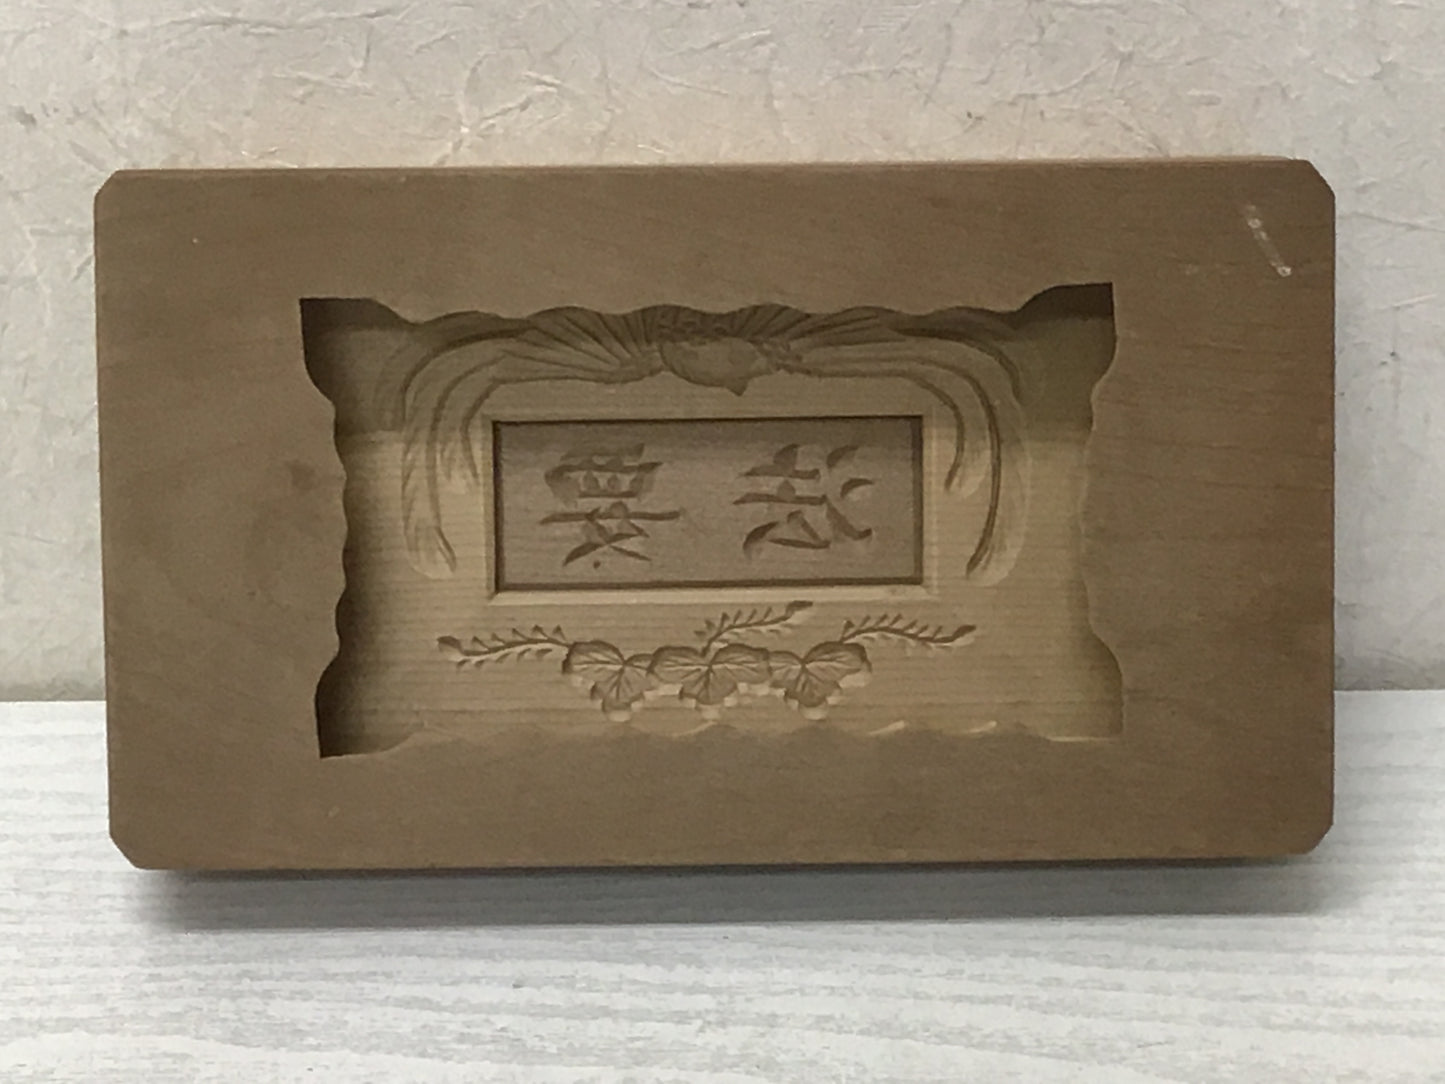 Y1959 KASHIGATA Buddhist memorial service Japanese Wooden Pastry Mold wagashi